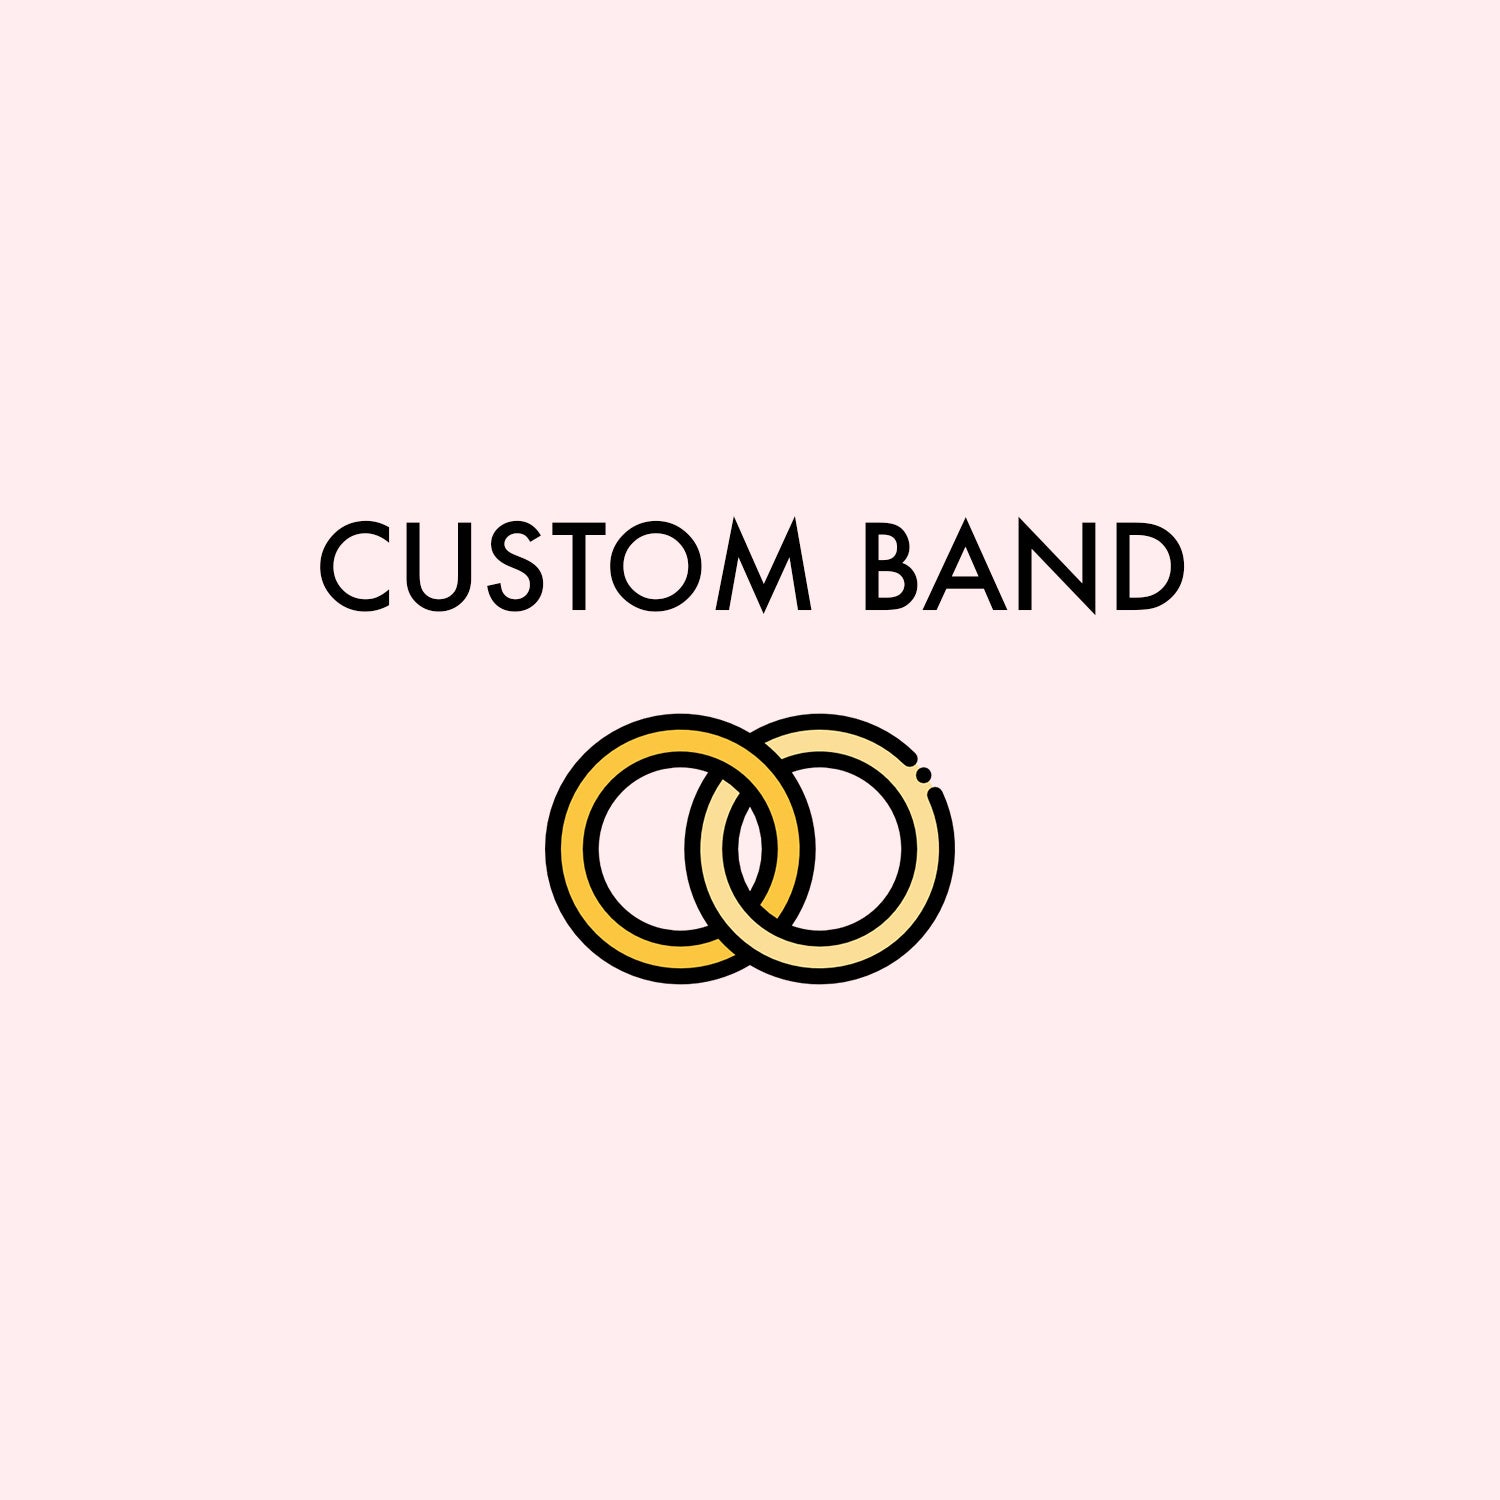 custom-band_26bab054-48d4-4bb1-987e-4322e07331f7.jpg